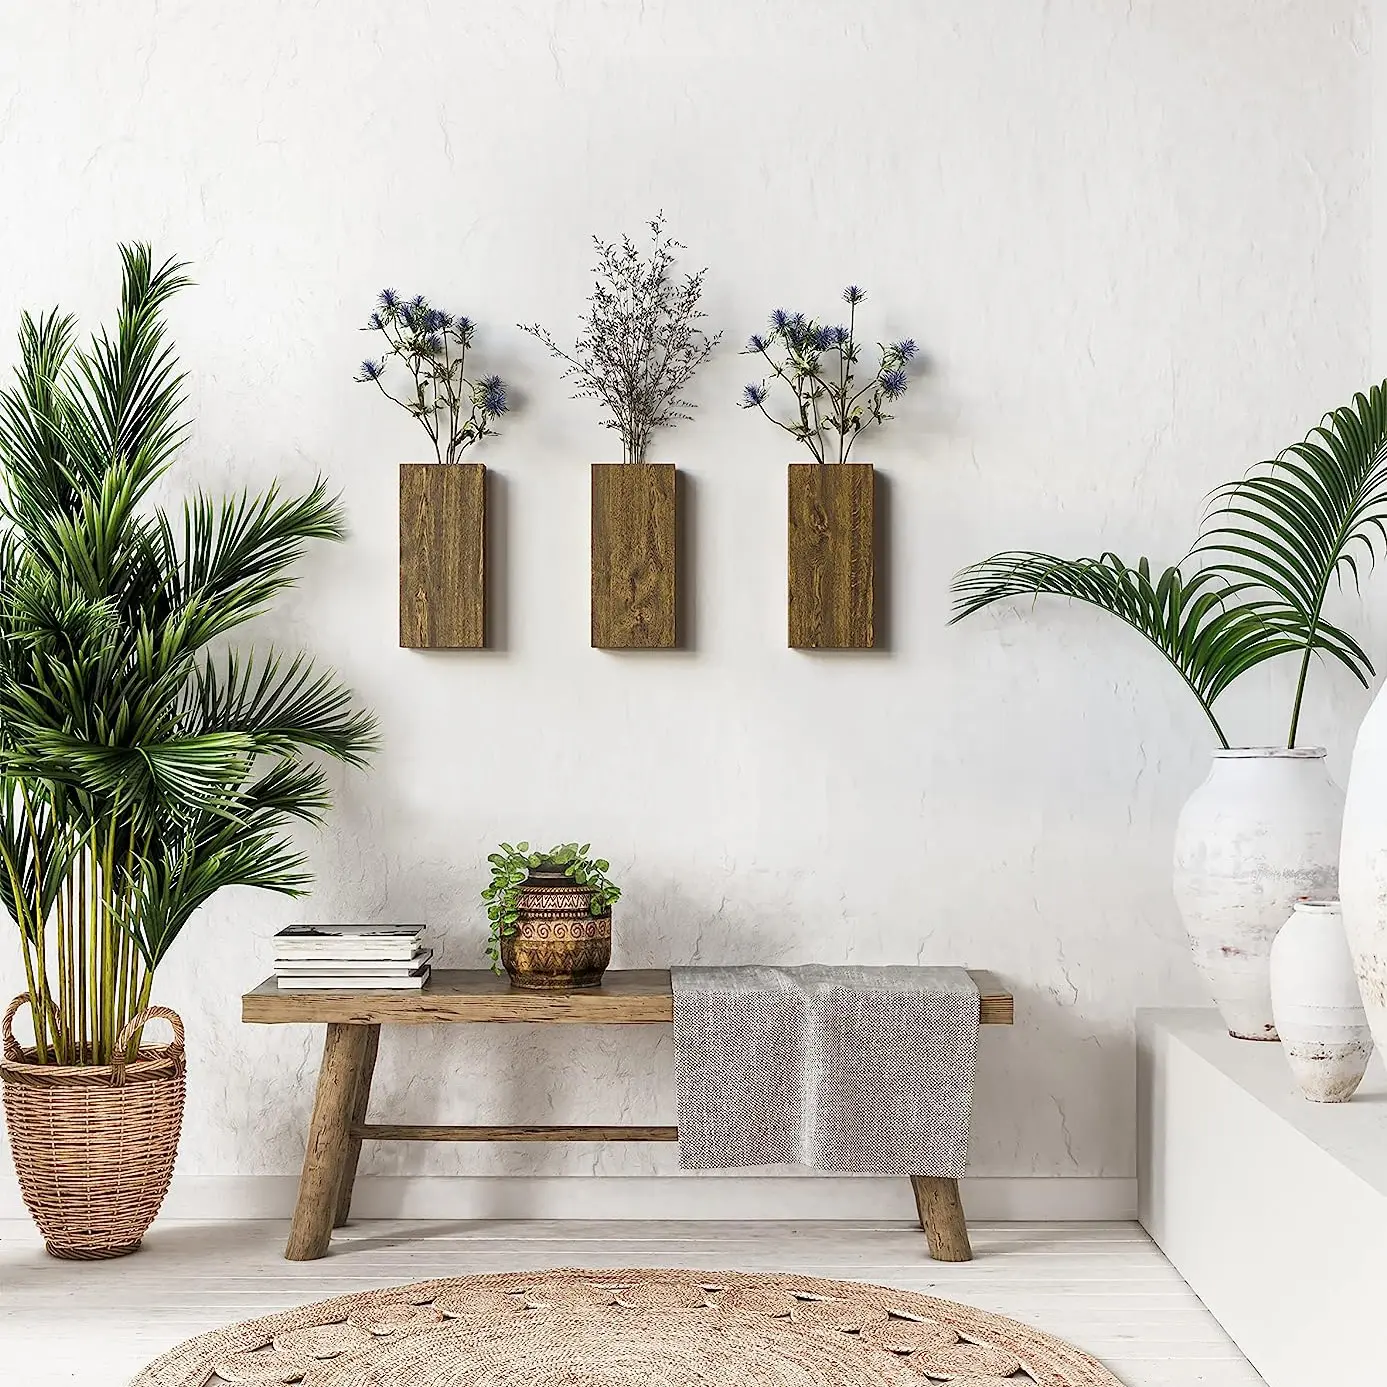 Wood wall pocket vases Luxury trend Decorative interior plants wooden wall decor rustic pocket flowerpots